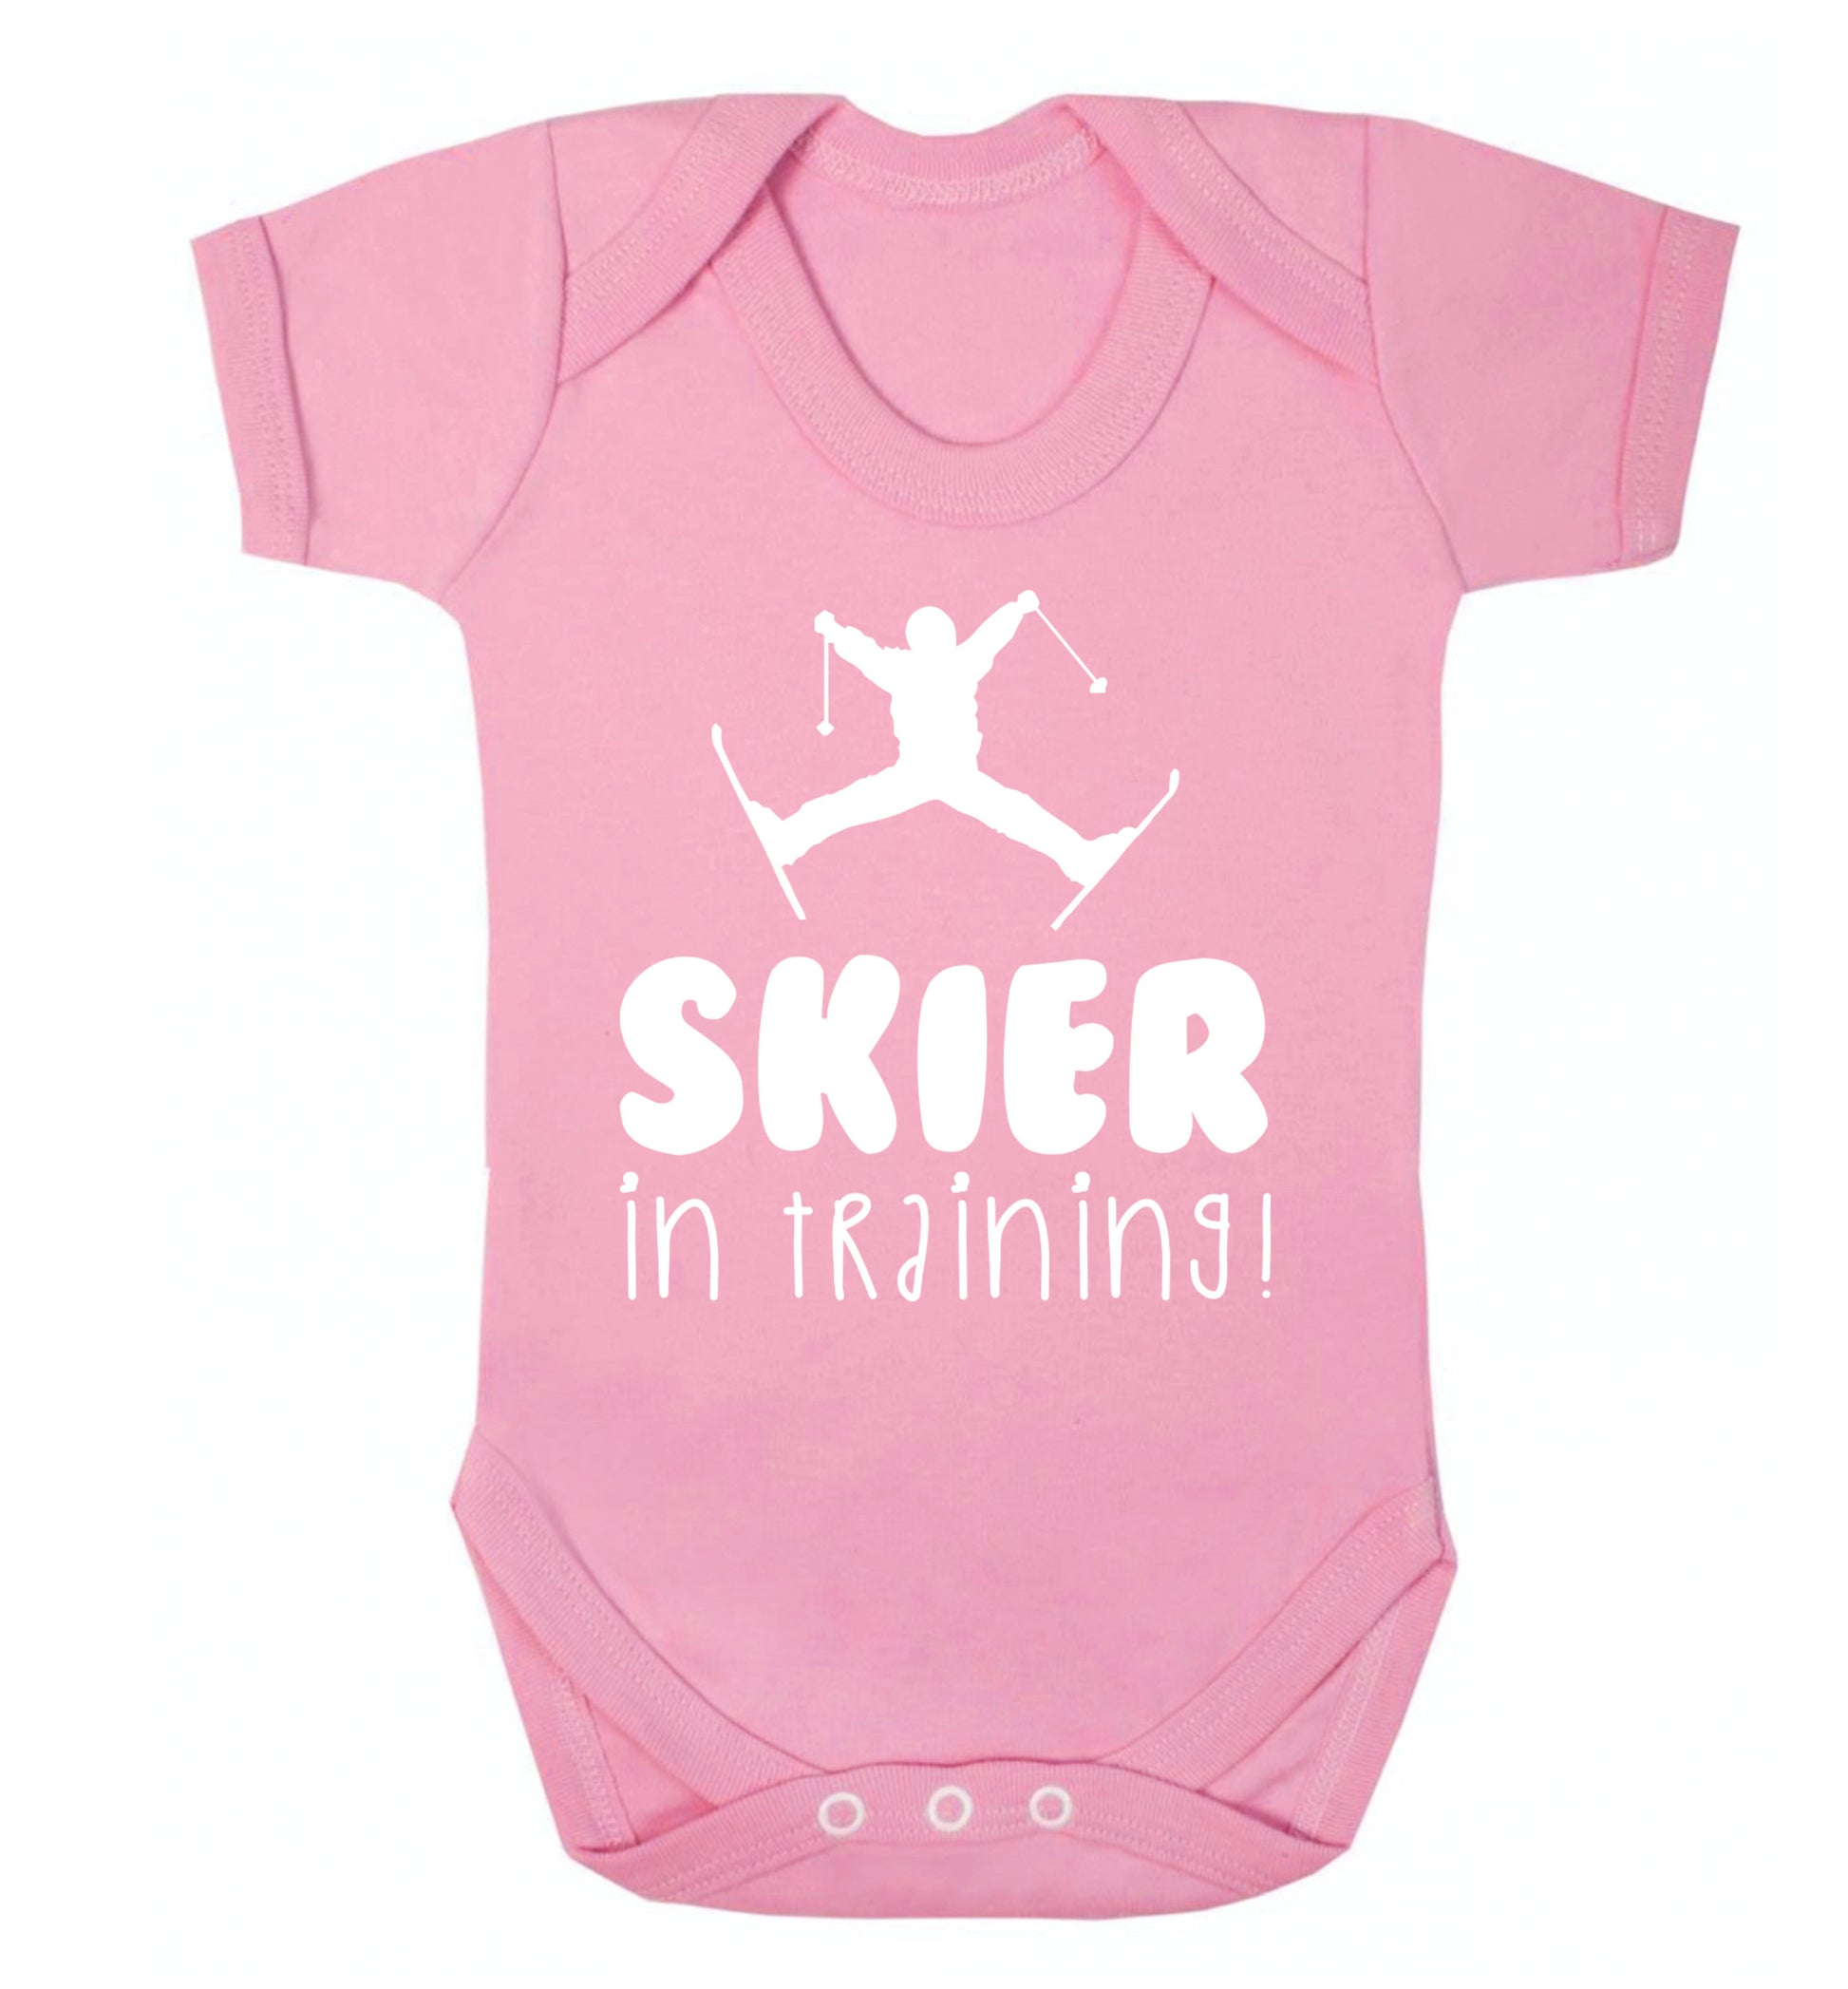 Skier in training Baby Vest pale pink 18-24 months